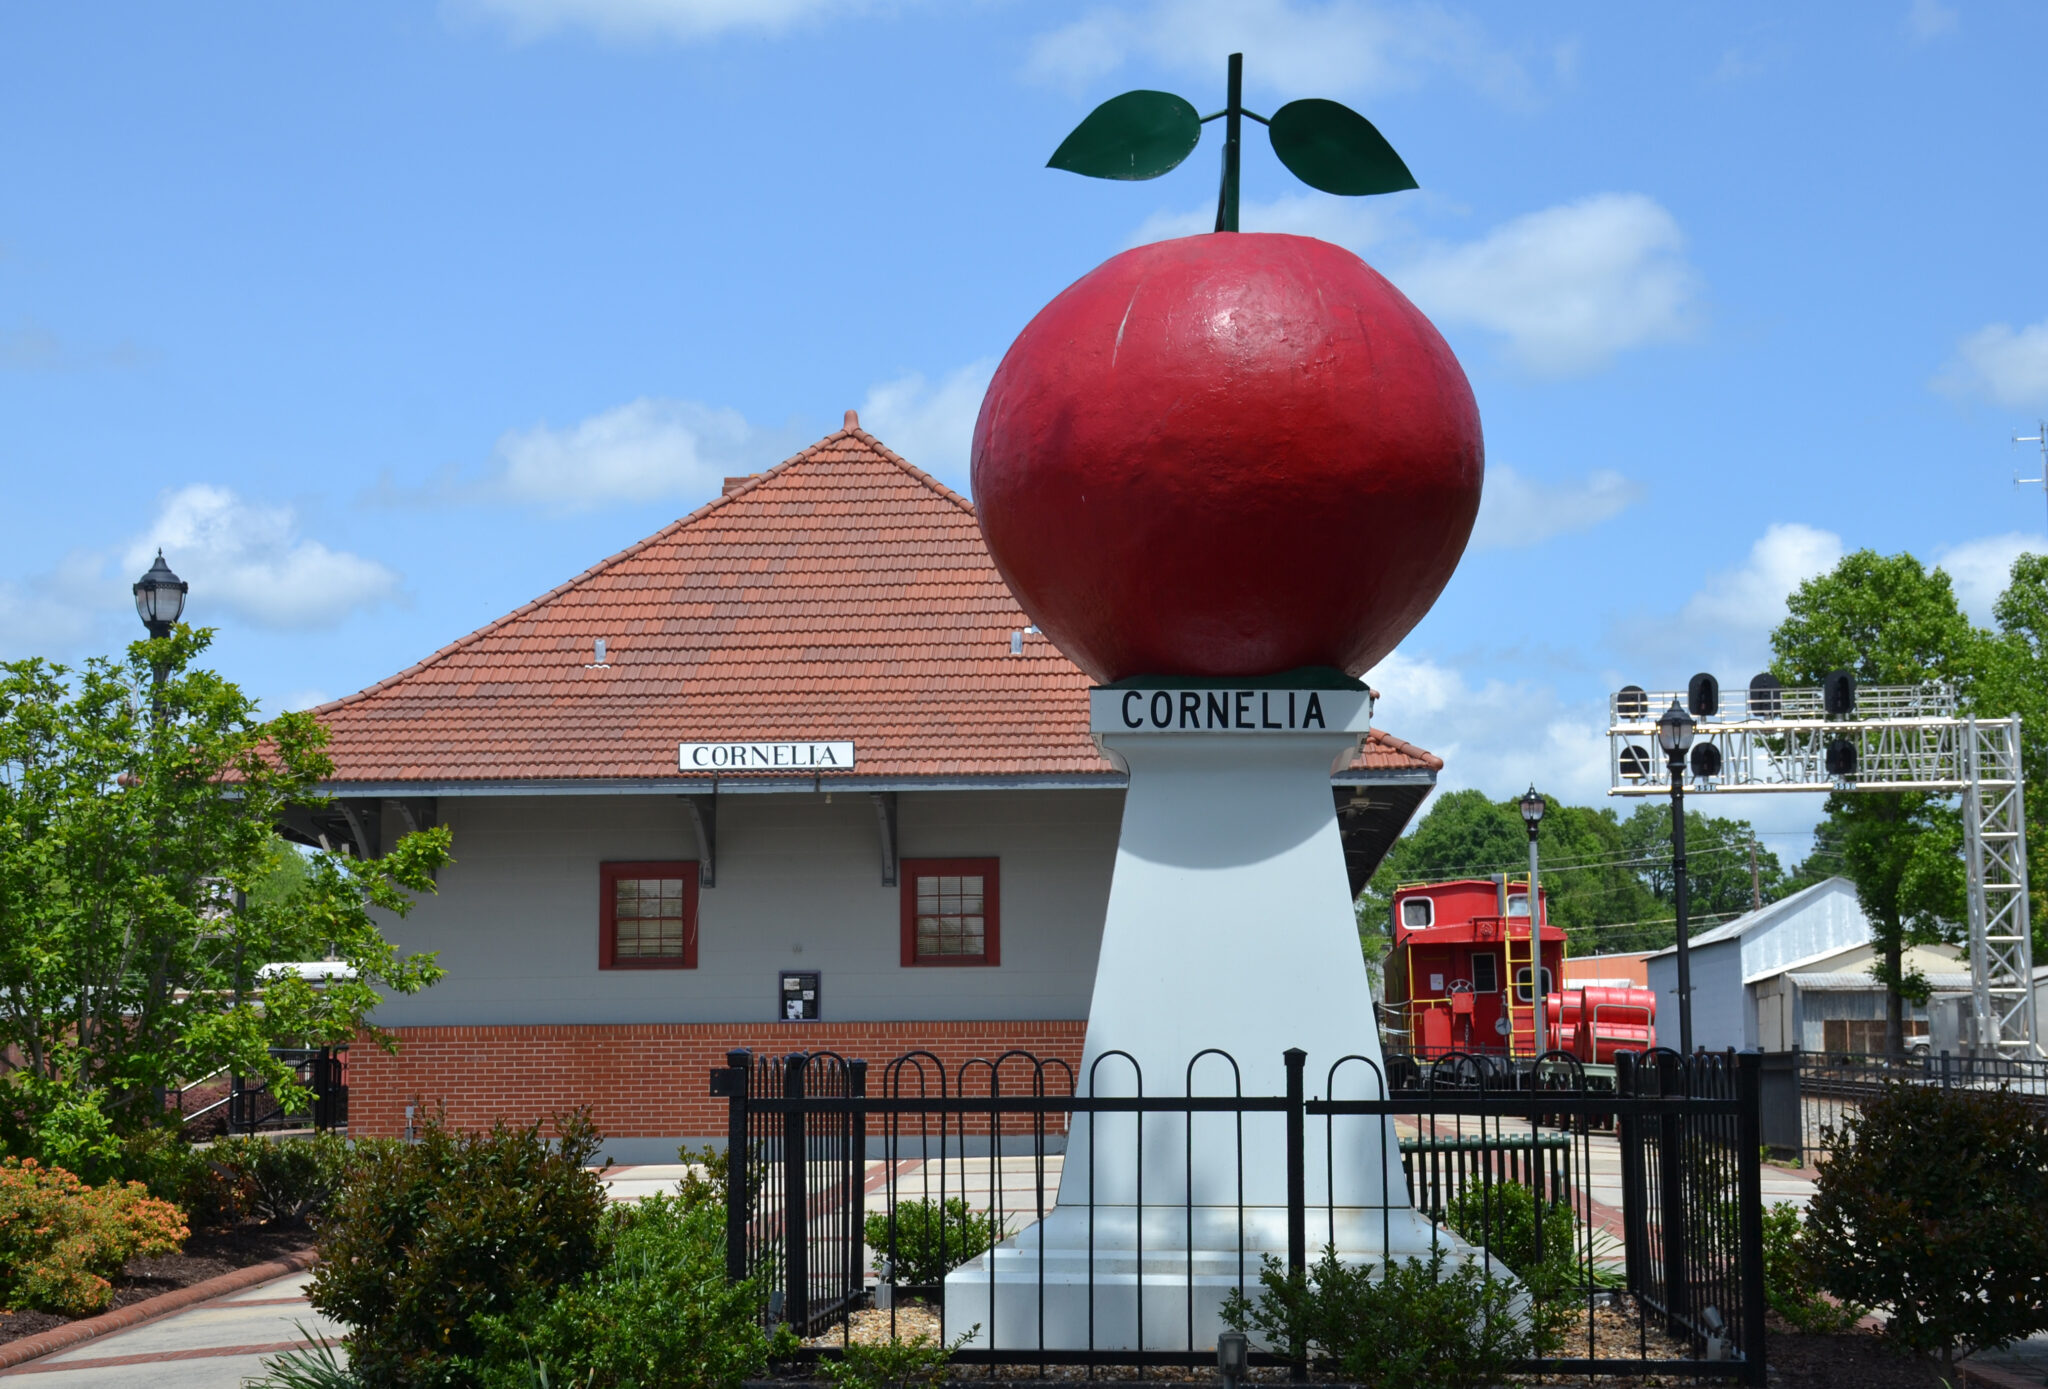 Cornelia train depot and big red apple